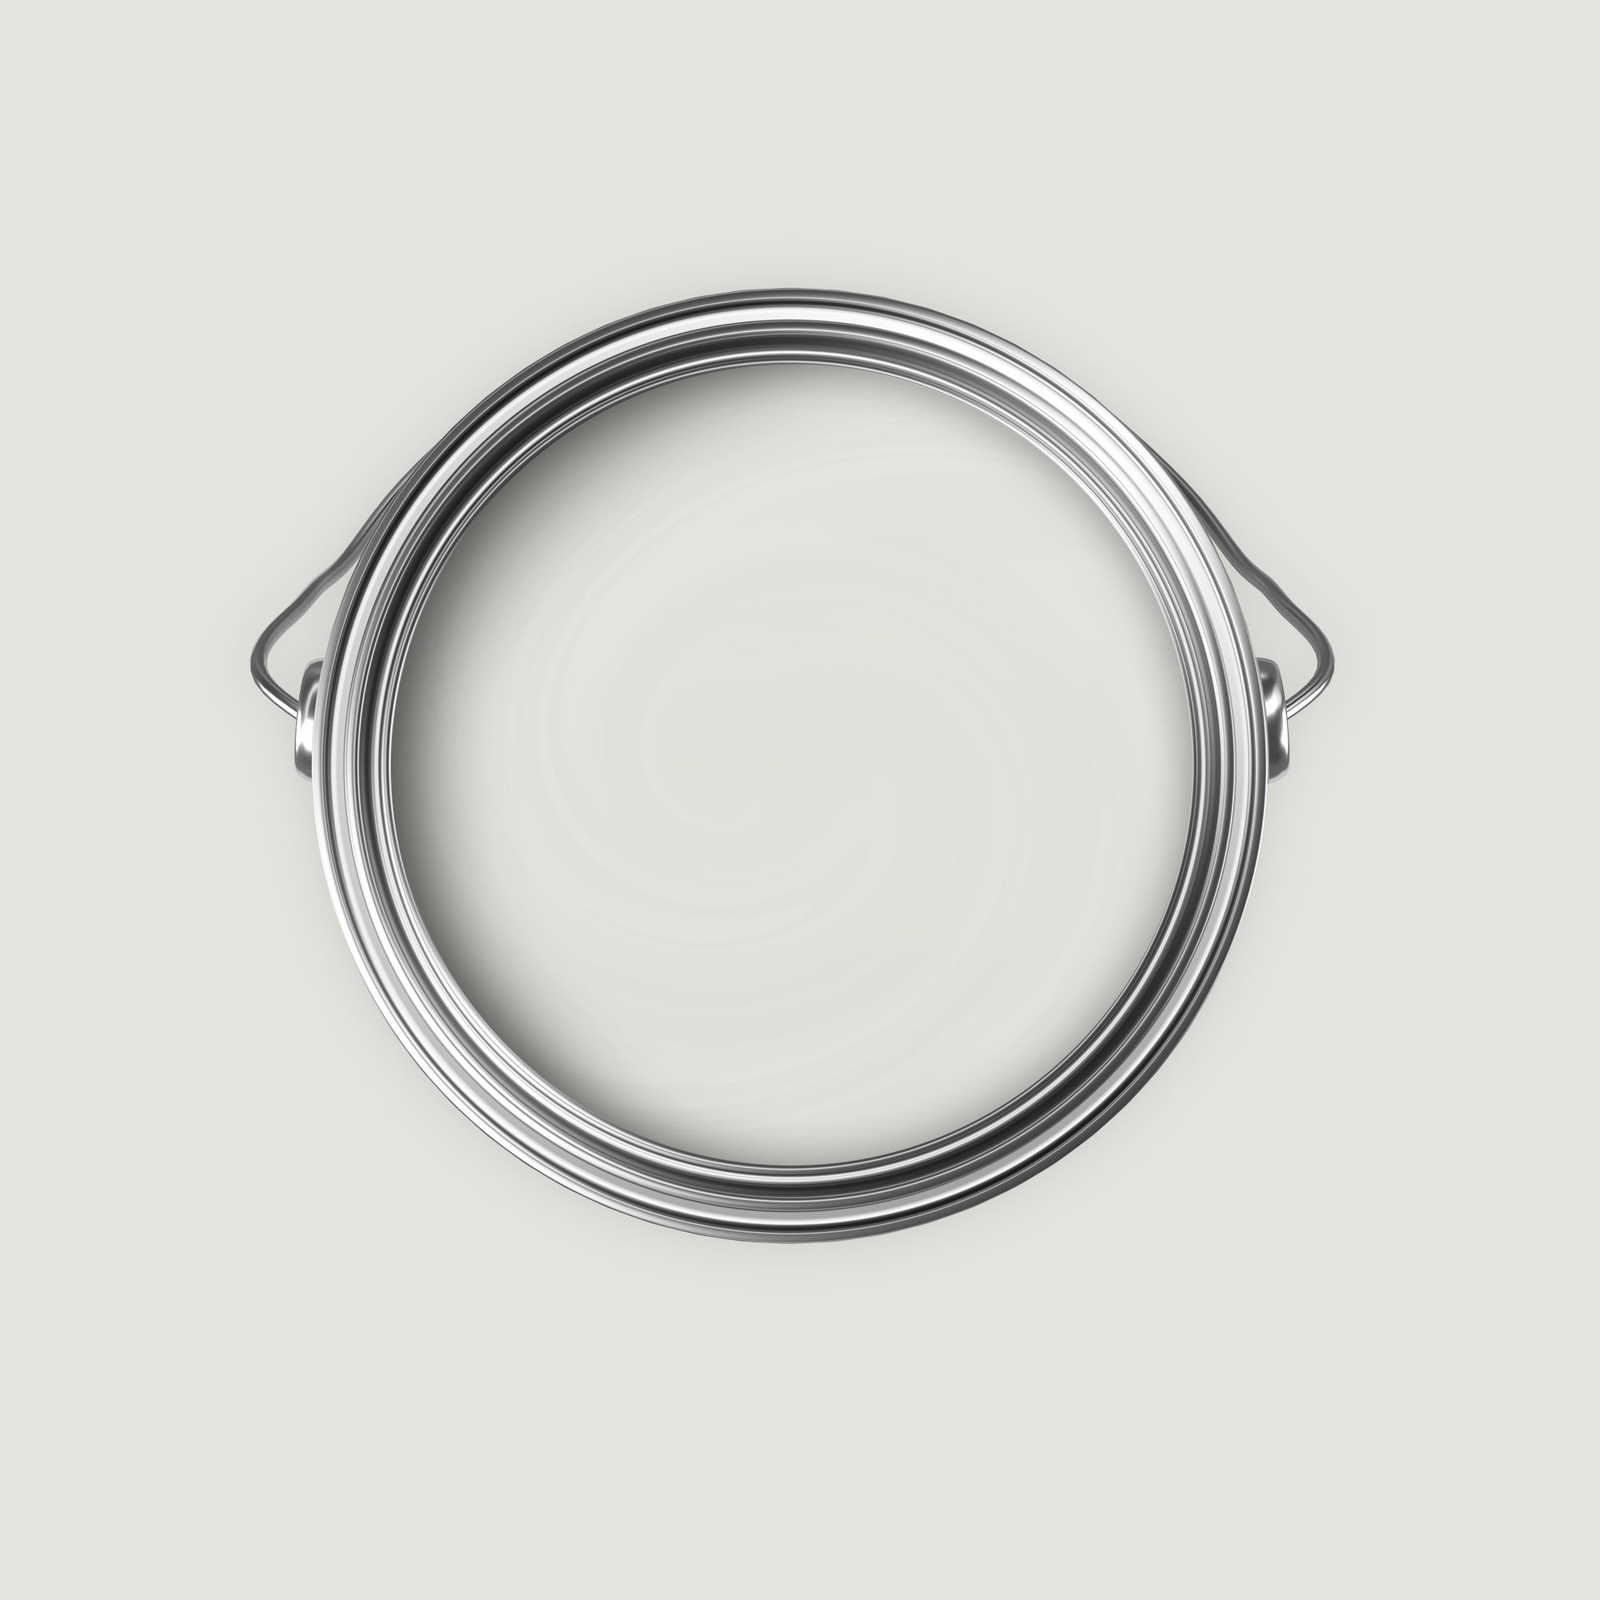             Premium Wandfarbe behagliches Hellgrau »Creamy Grey« NW107 – 5 Liter
        